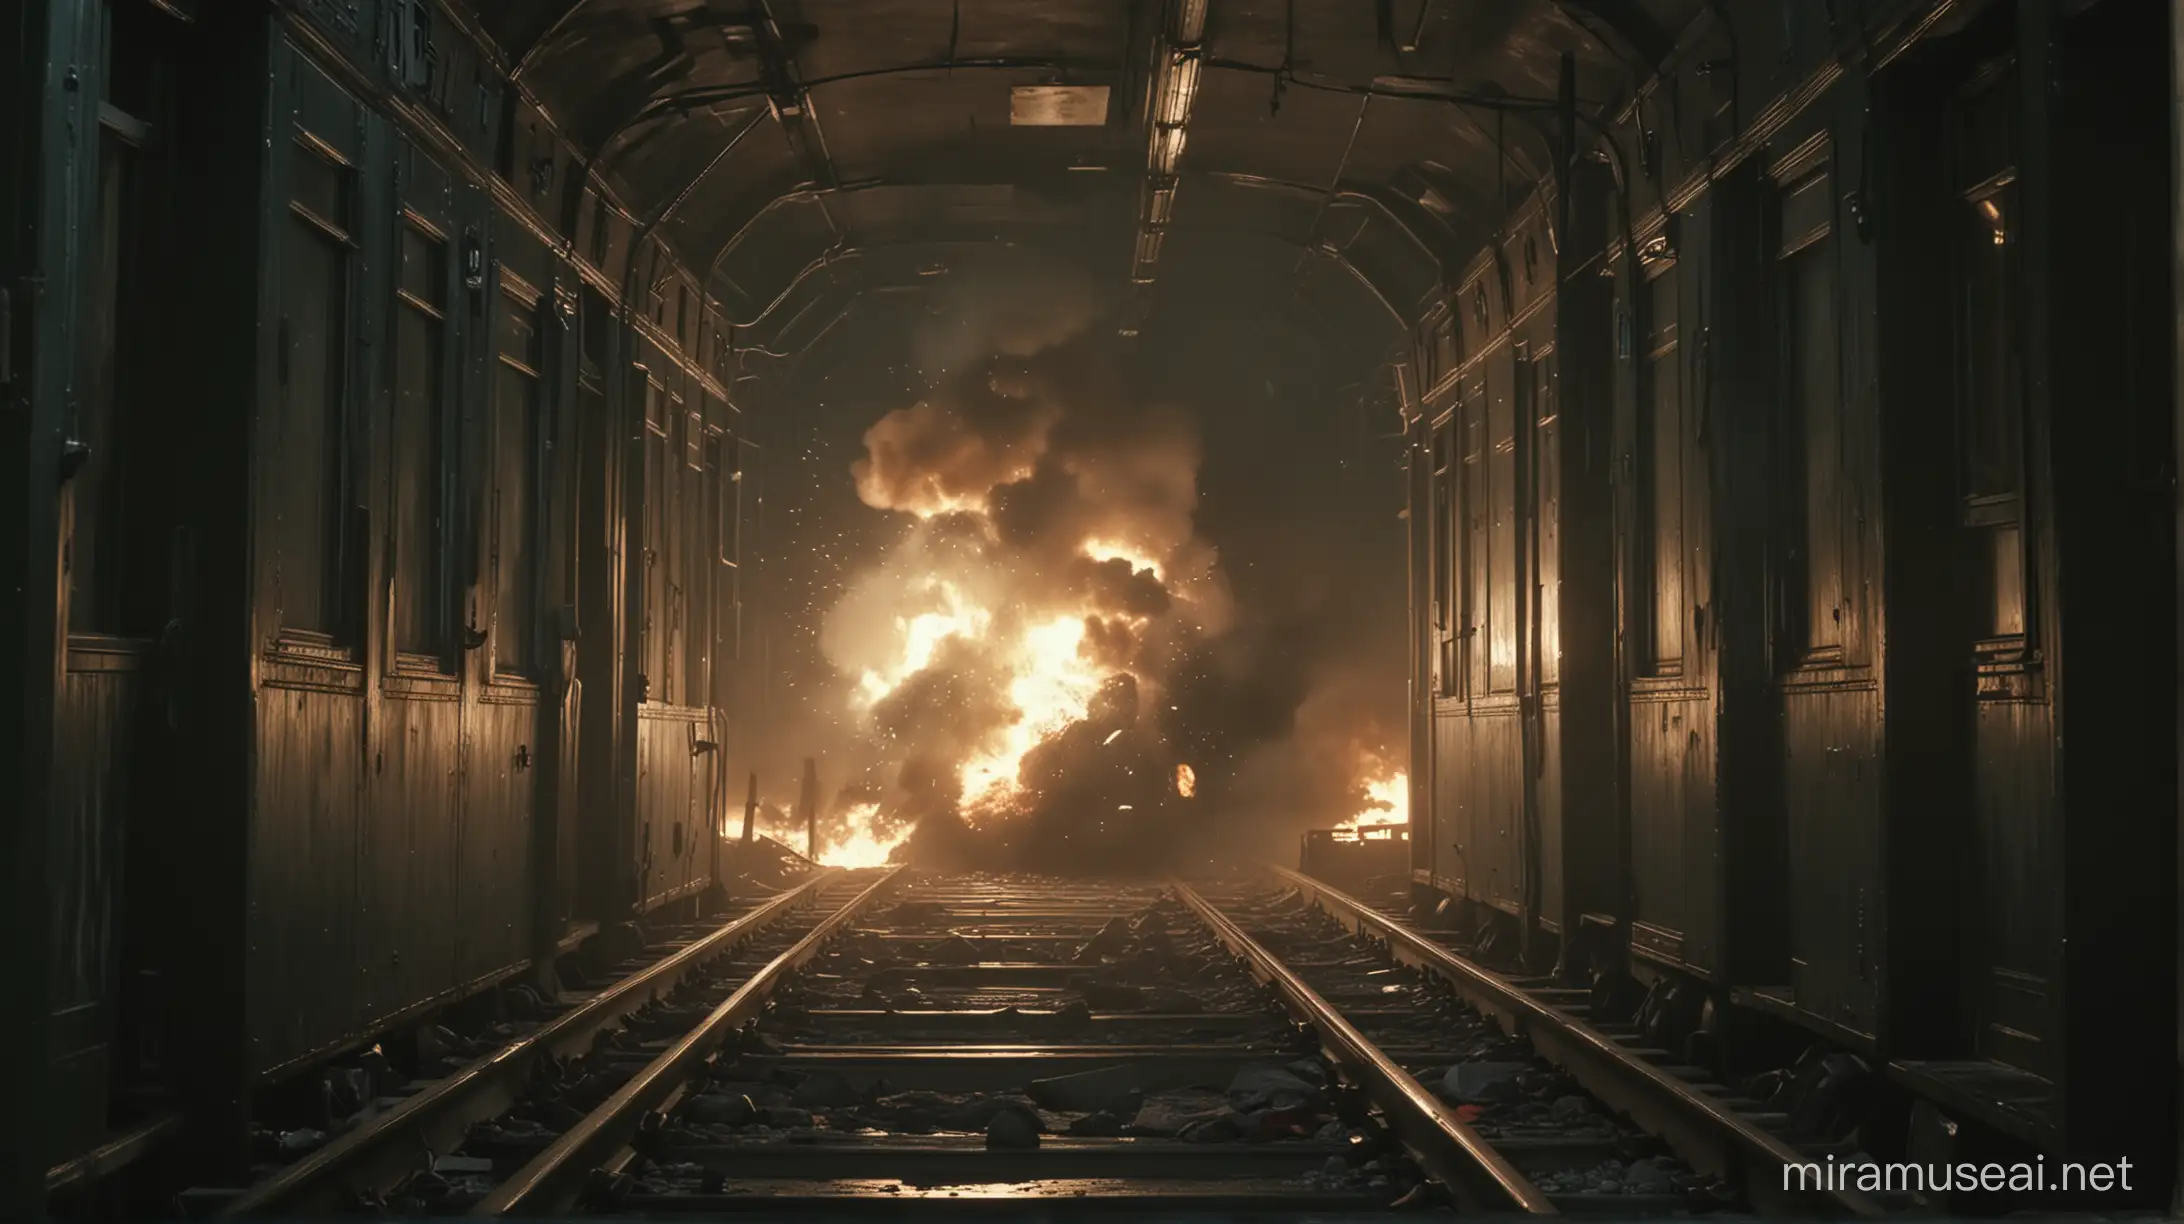 cinematic still, resident evil, train carriage interior, explosion, night